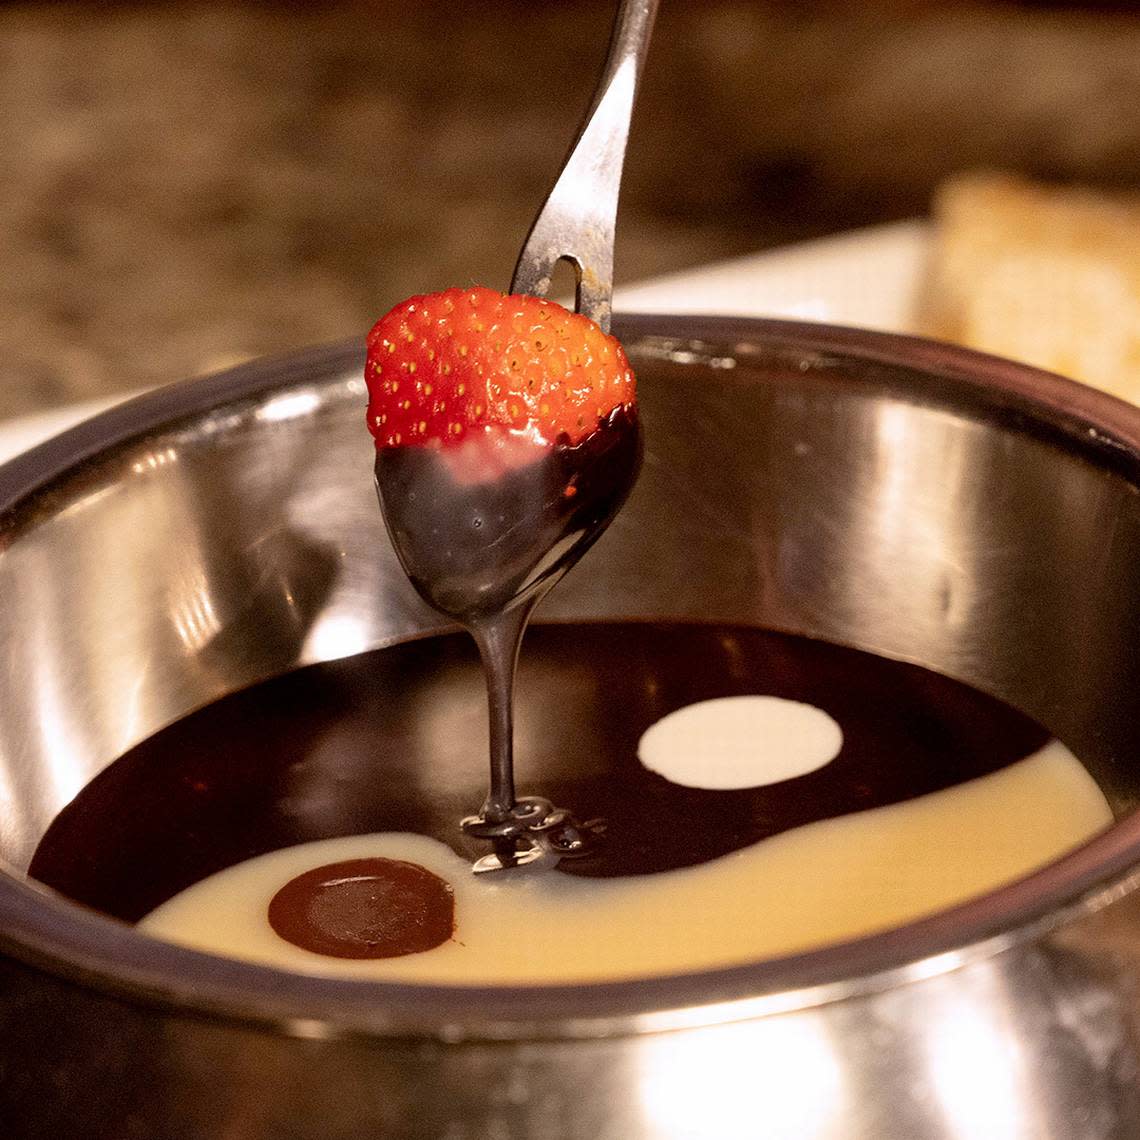 Decadent fondue is on the menu.